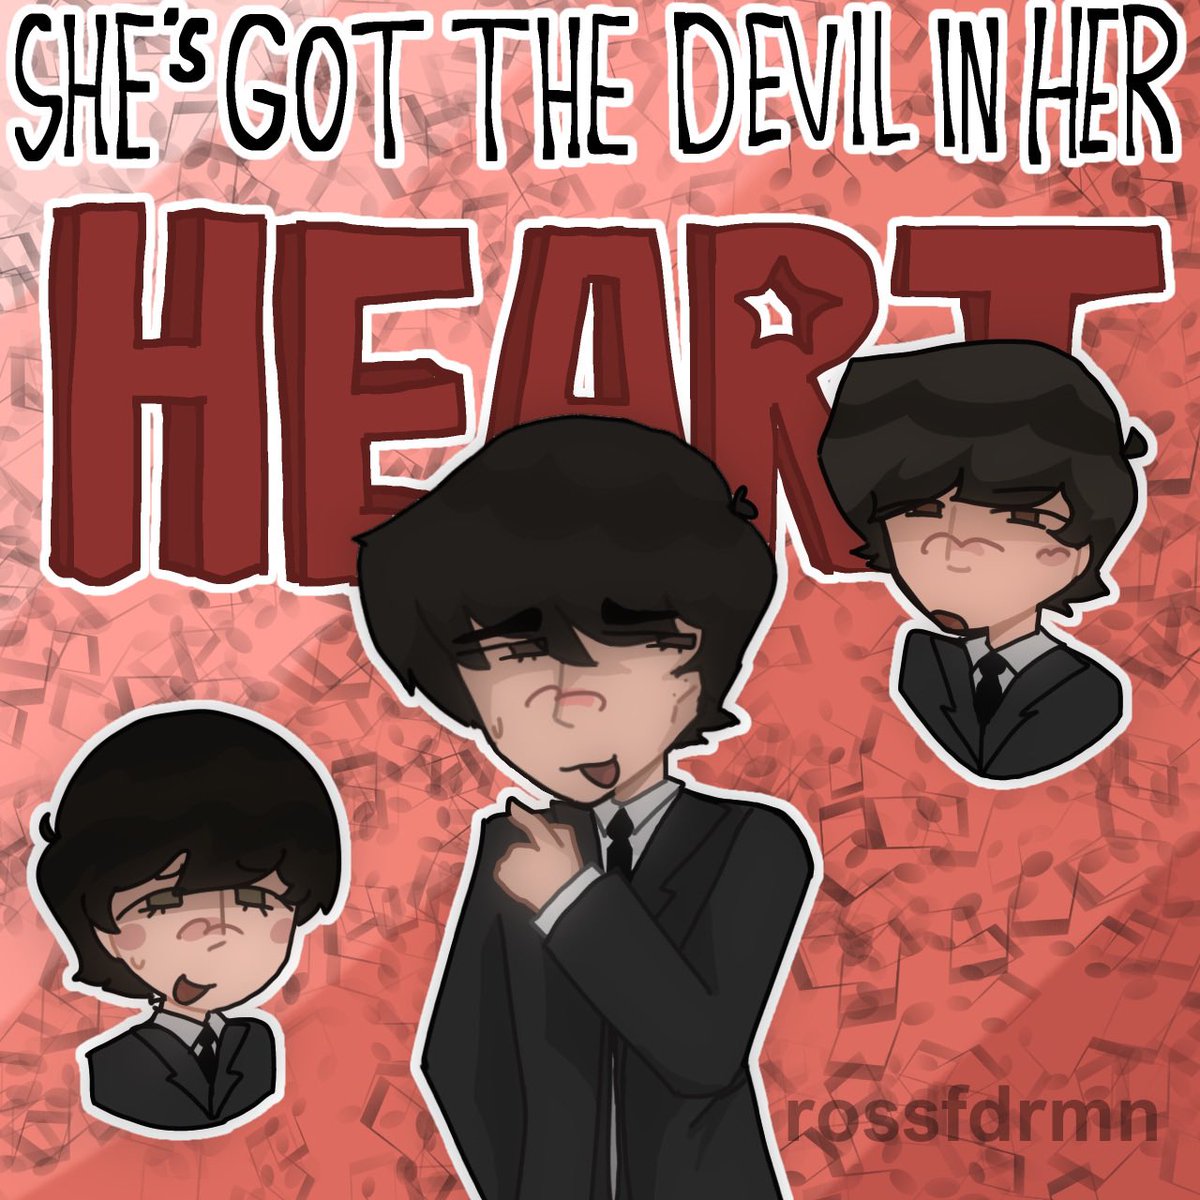 shes got the devil in her heartttt

#TheBeatles